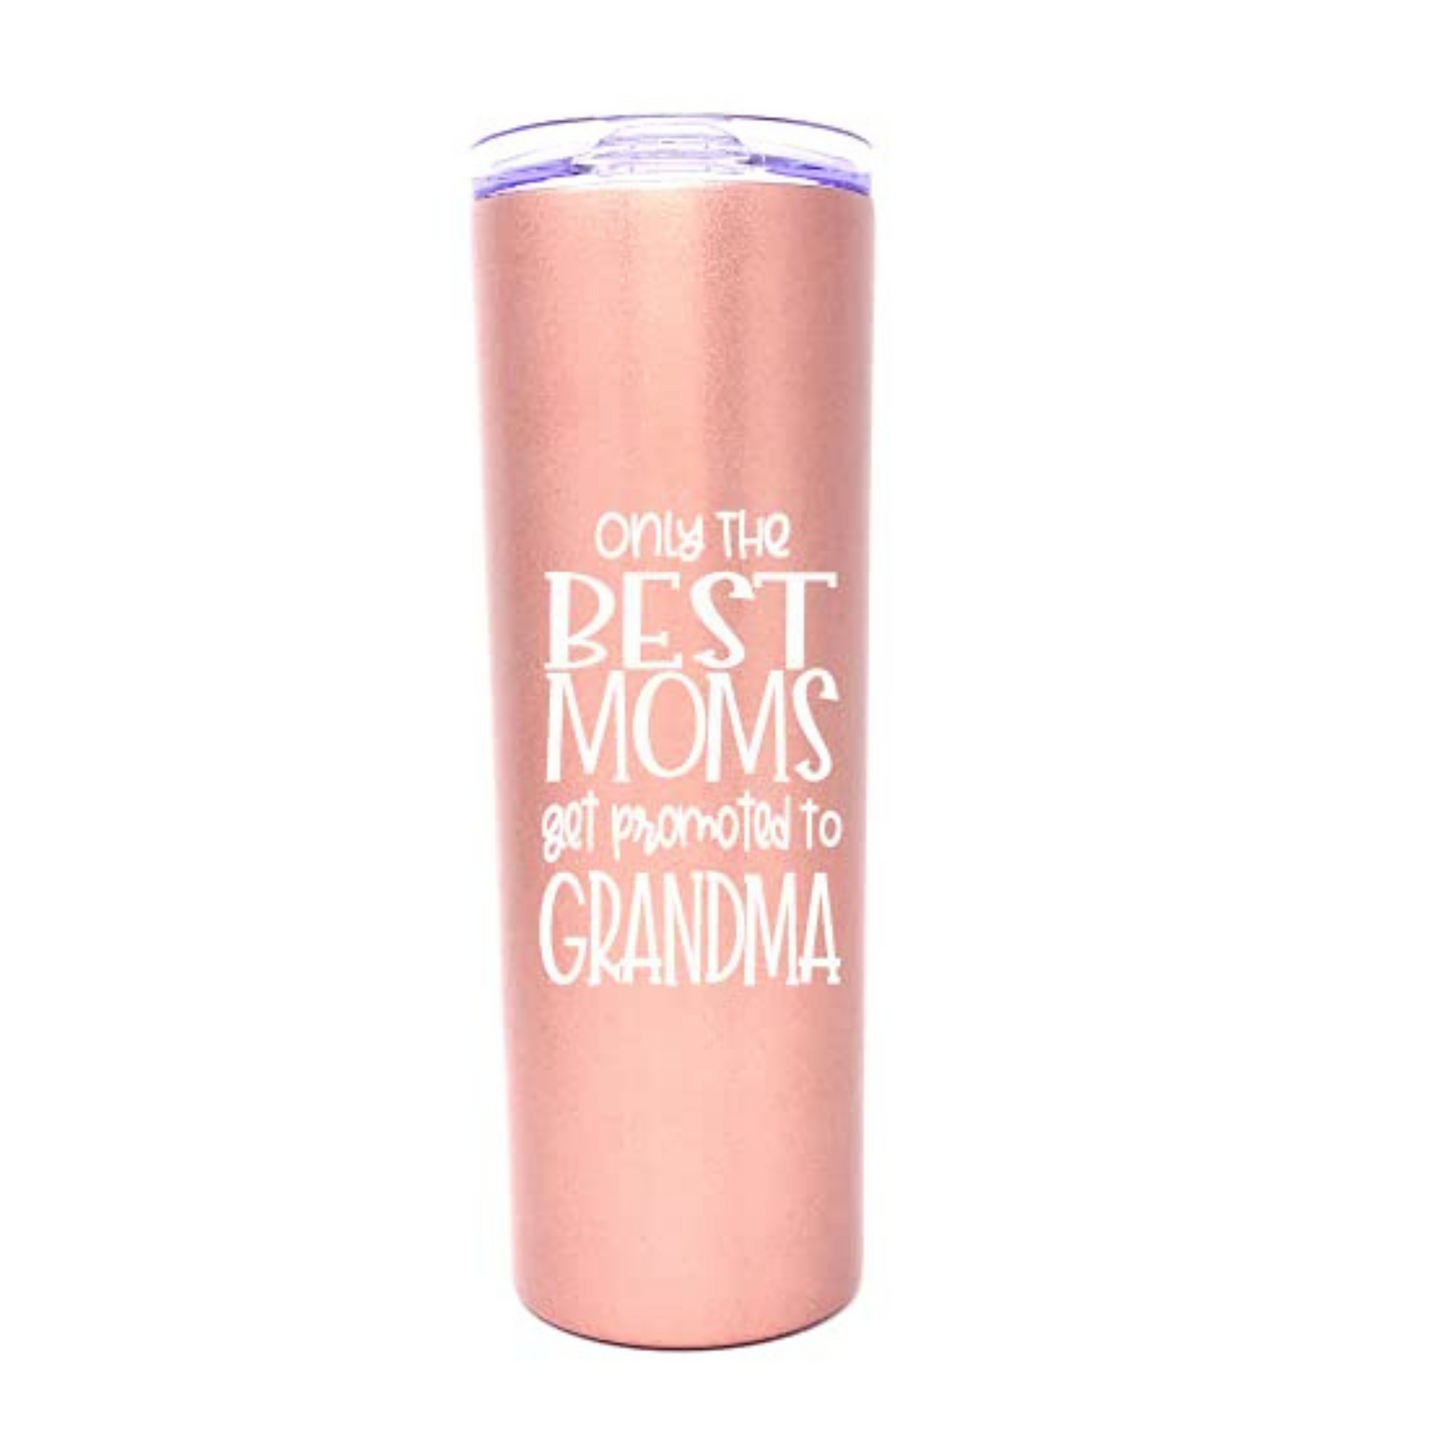 Best Moms Promoted to Grandma 20 oz Rose Gold Skinny Tumbler for Grandmothers